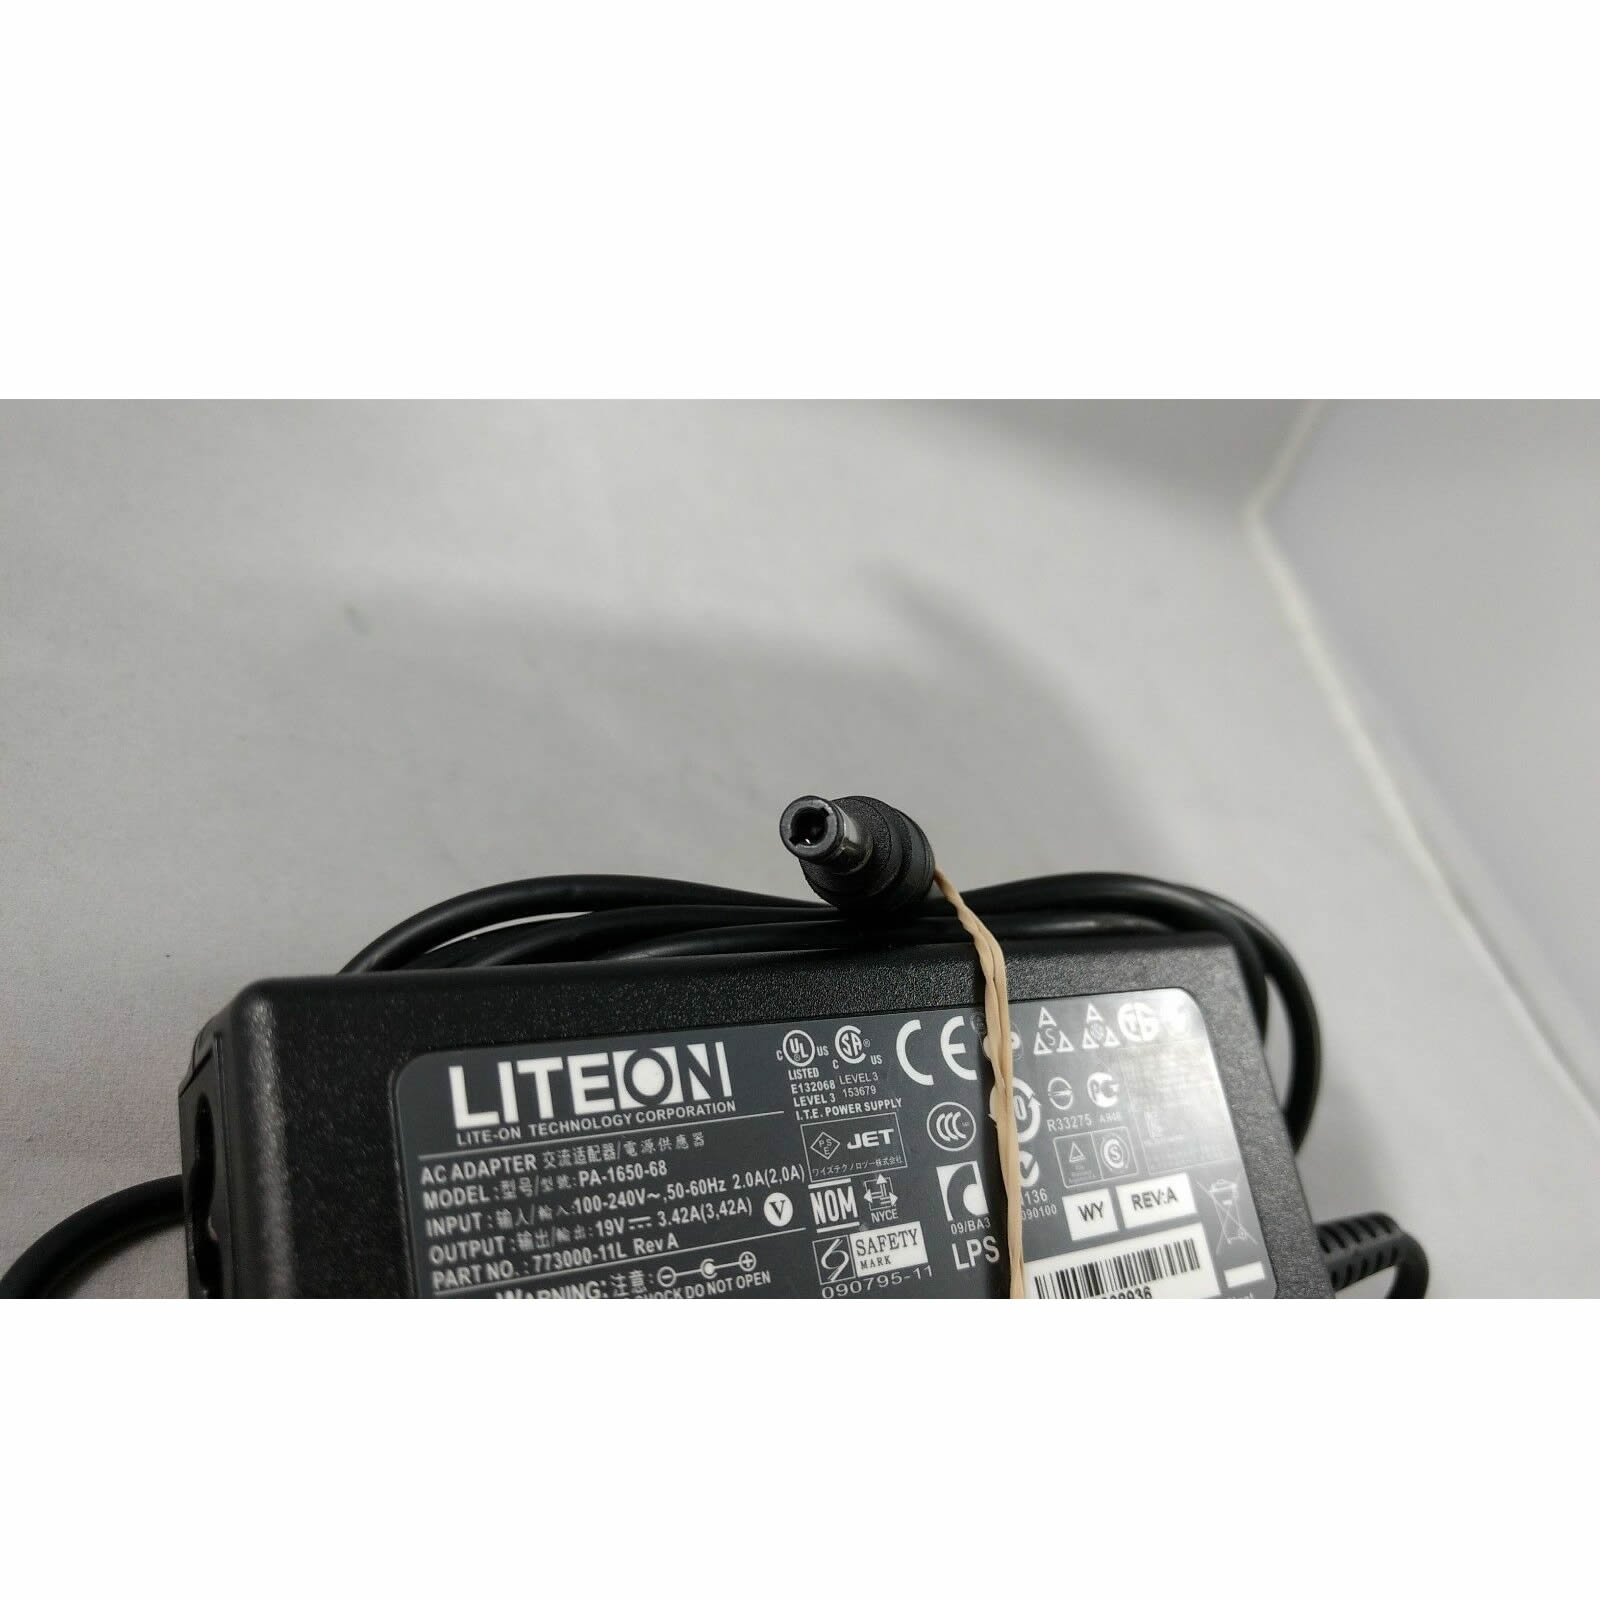 Lg 65W 19V 3.42A ADP-65JH AB Original AC Adapter for LG R400 R410 22CV241-B M2380D M2380DF LCD Monitor Power Adapter